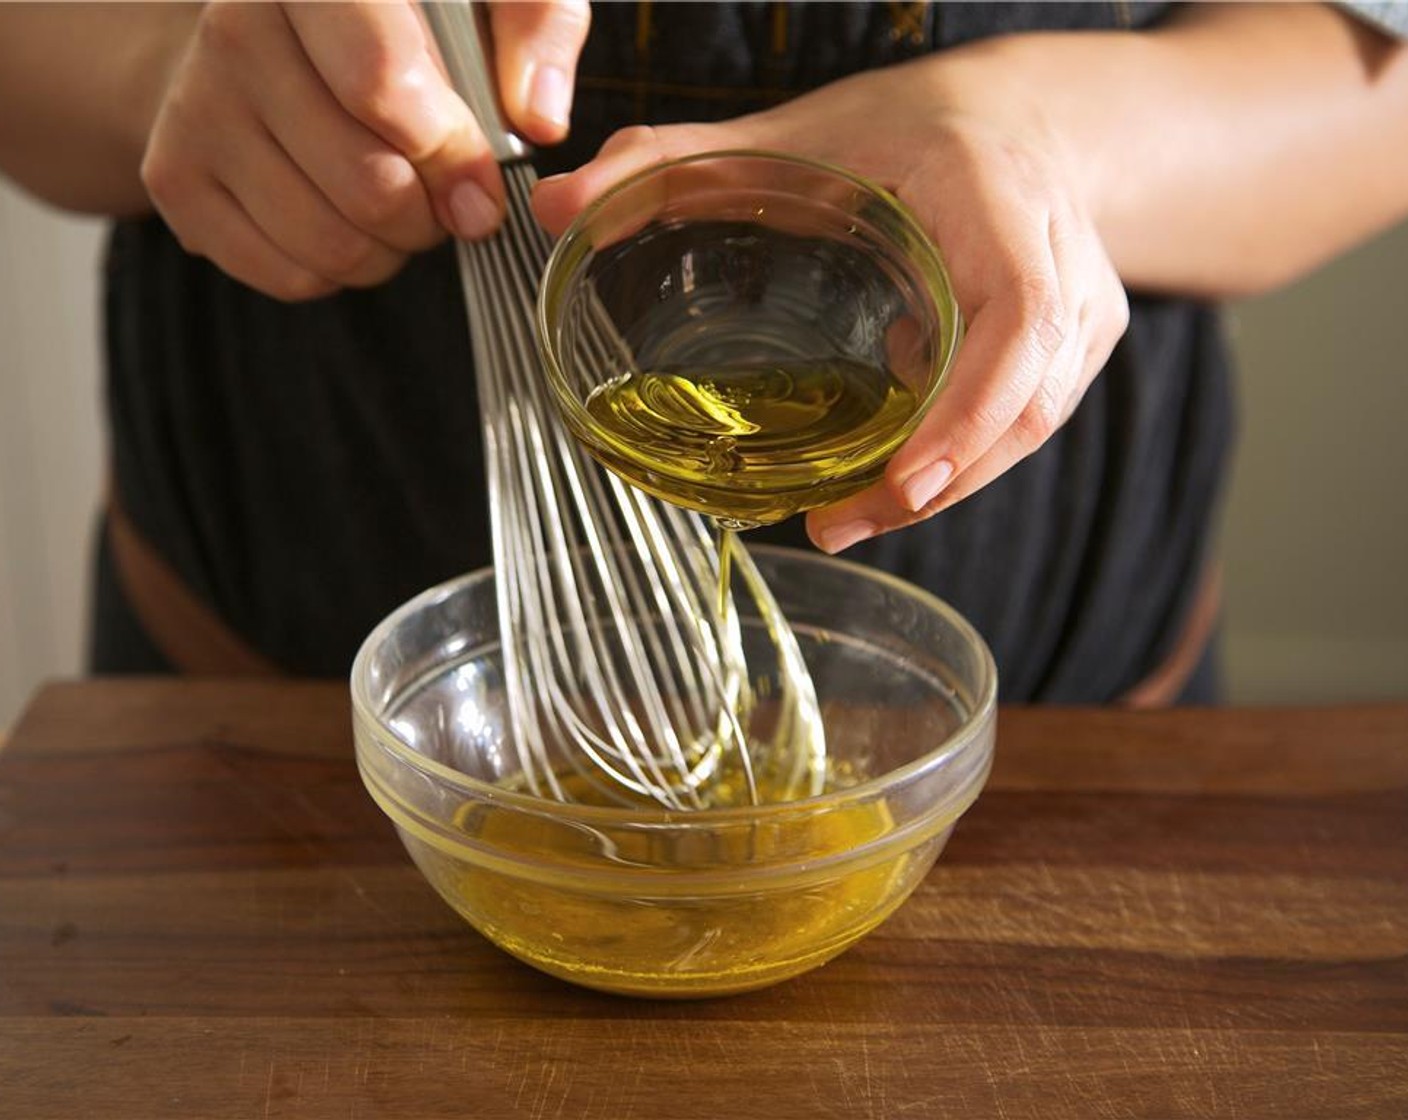 step 7 In a medium bowl, combine Honey (1 Tbsp), White Wine Vinegar (2 Tbsp), and Curry Powder (1 tsp). Stir to combine.